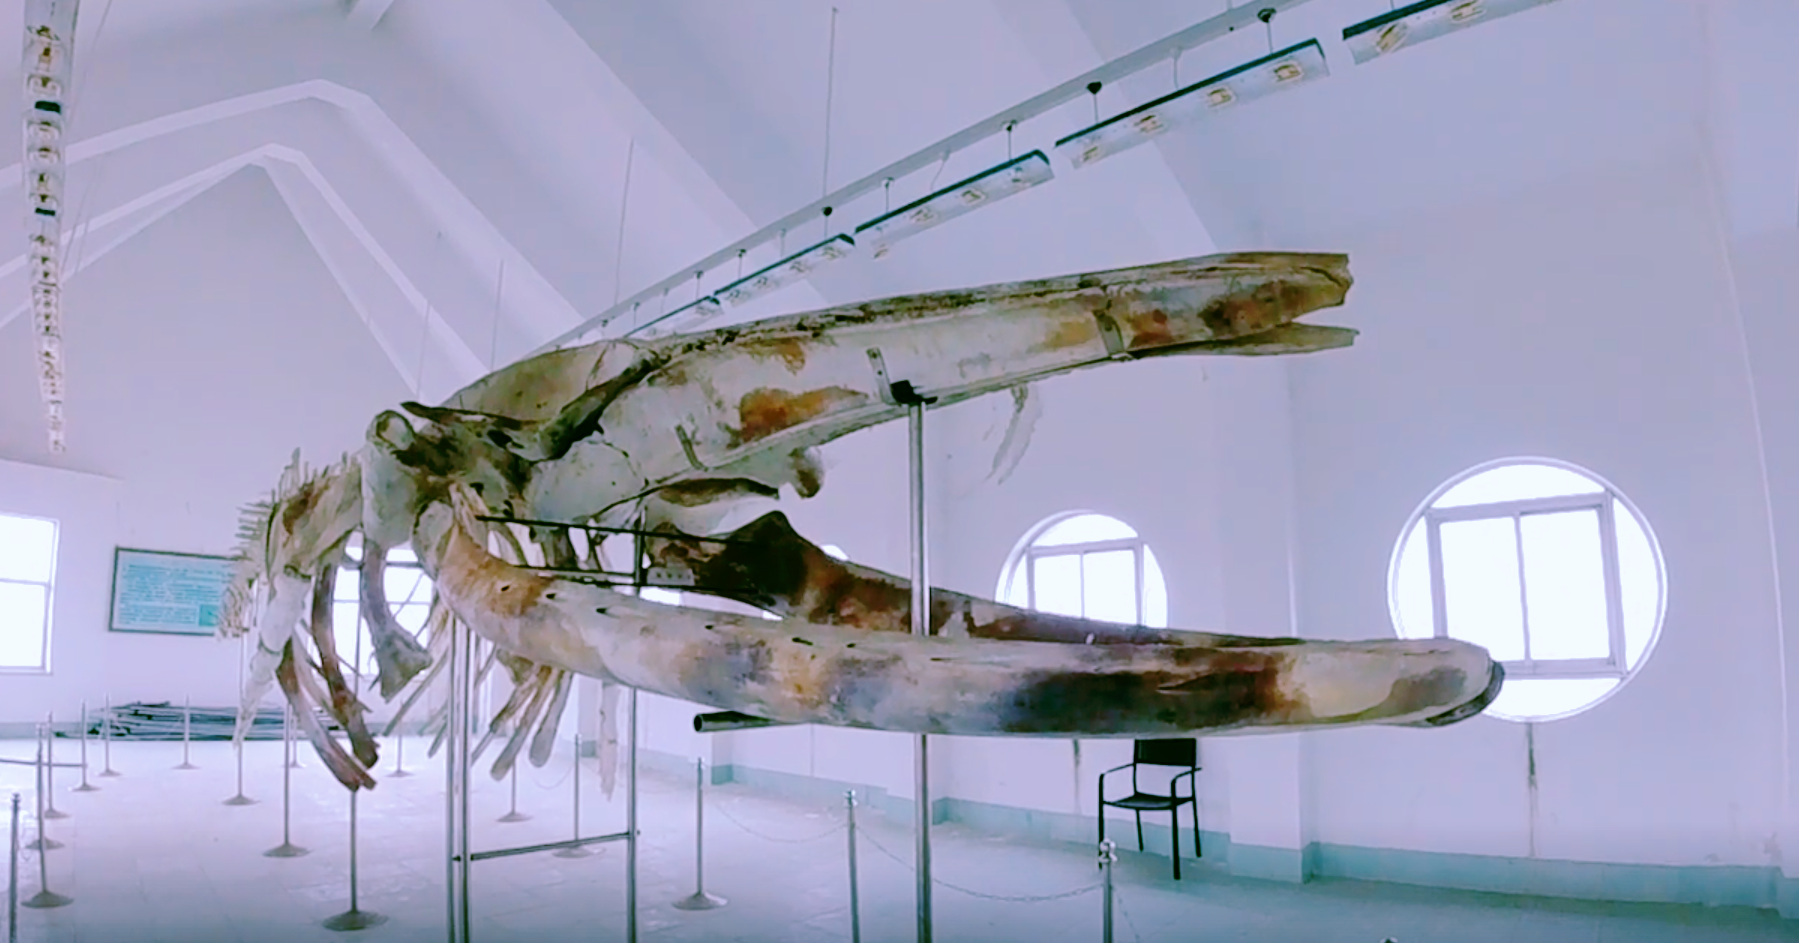 青島廢棄博物館，藏有巨鯨標本和骨骼，被一個老人日夜守護著